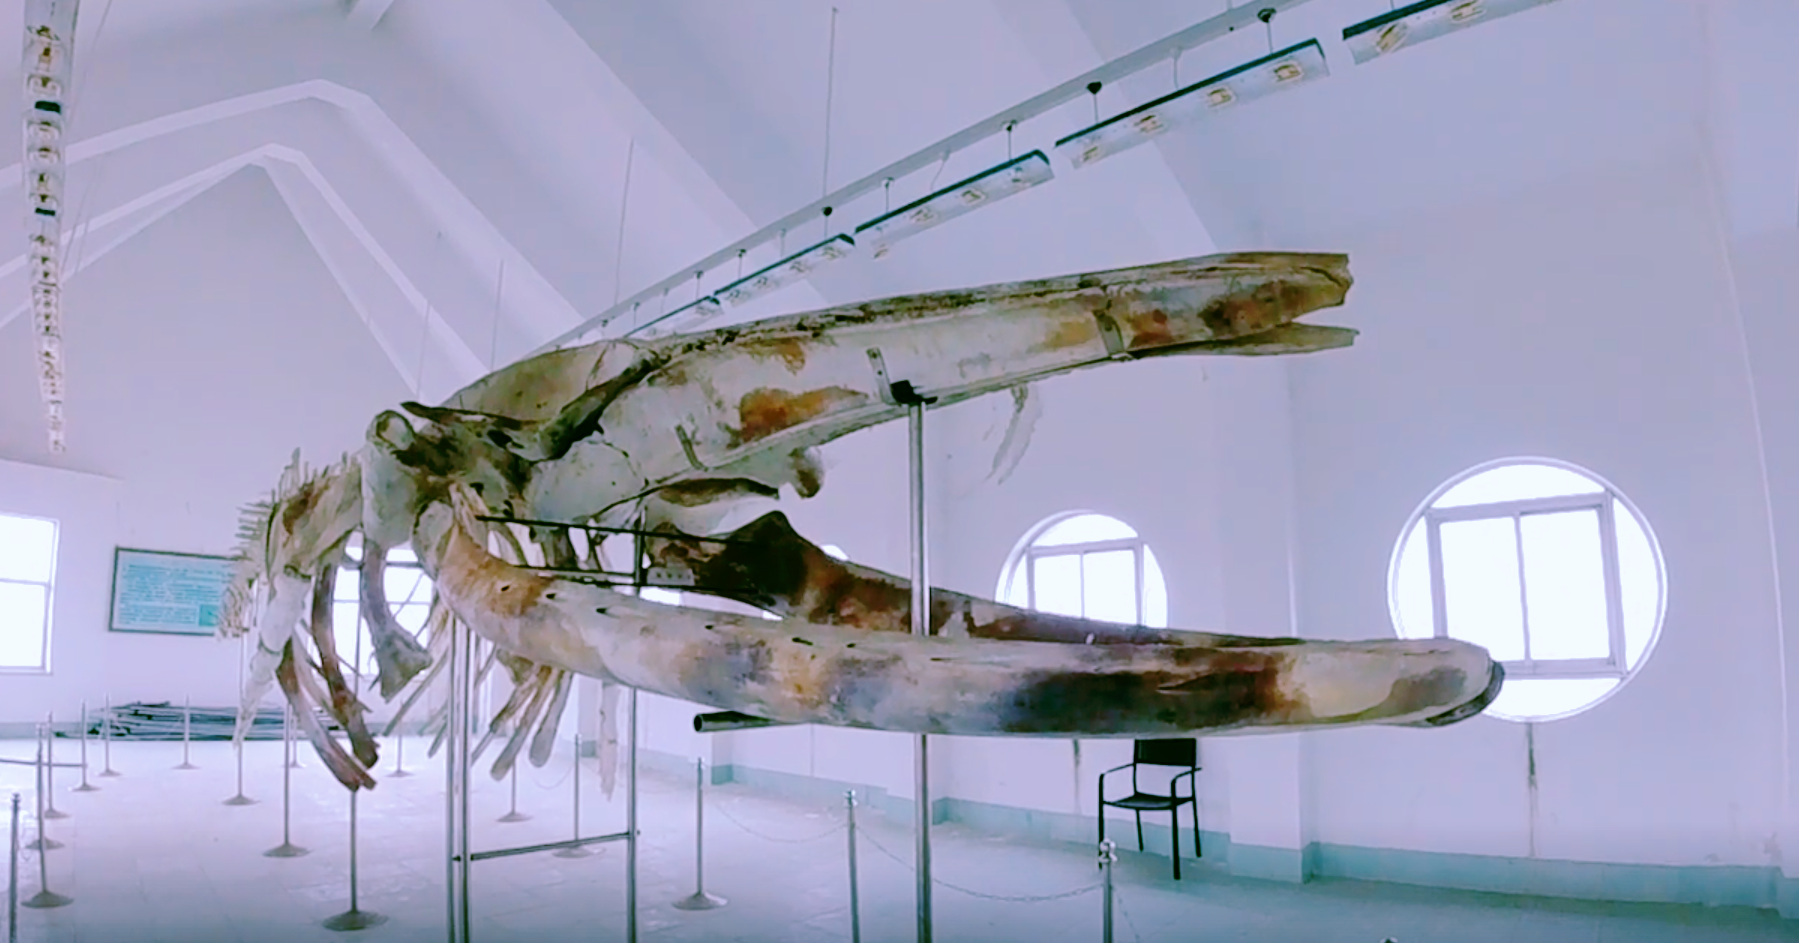 青島廢棄博物館，藏有巨鯨標本和骨骼，被一個老人日夜守護著